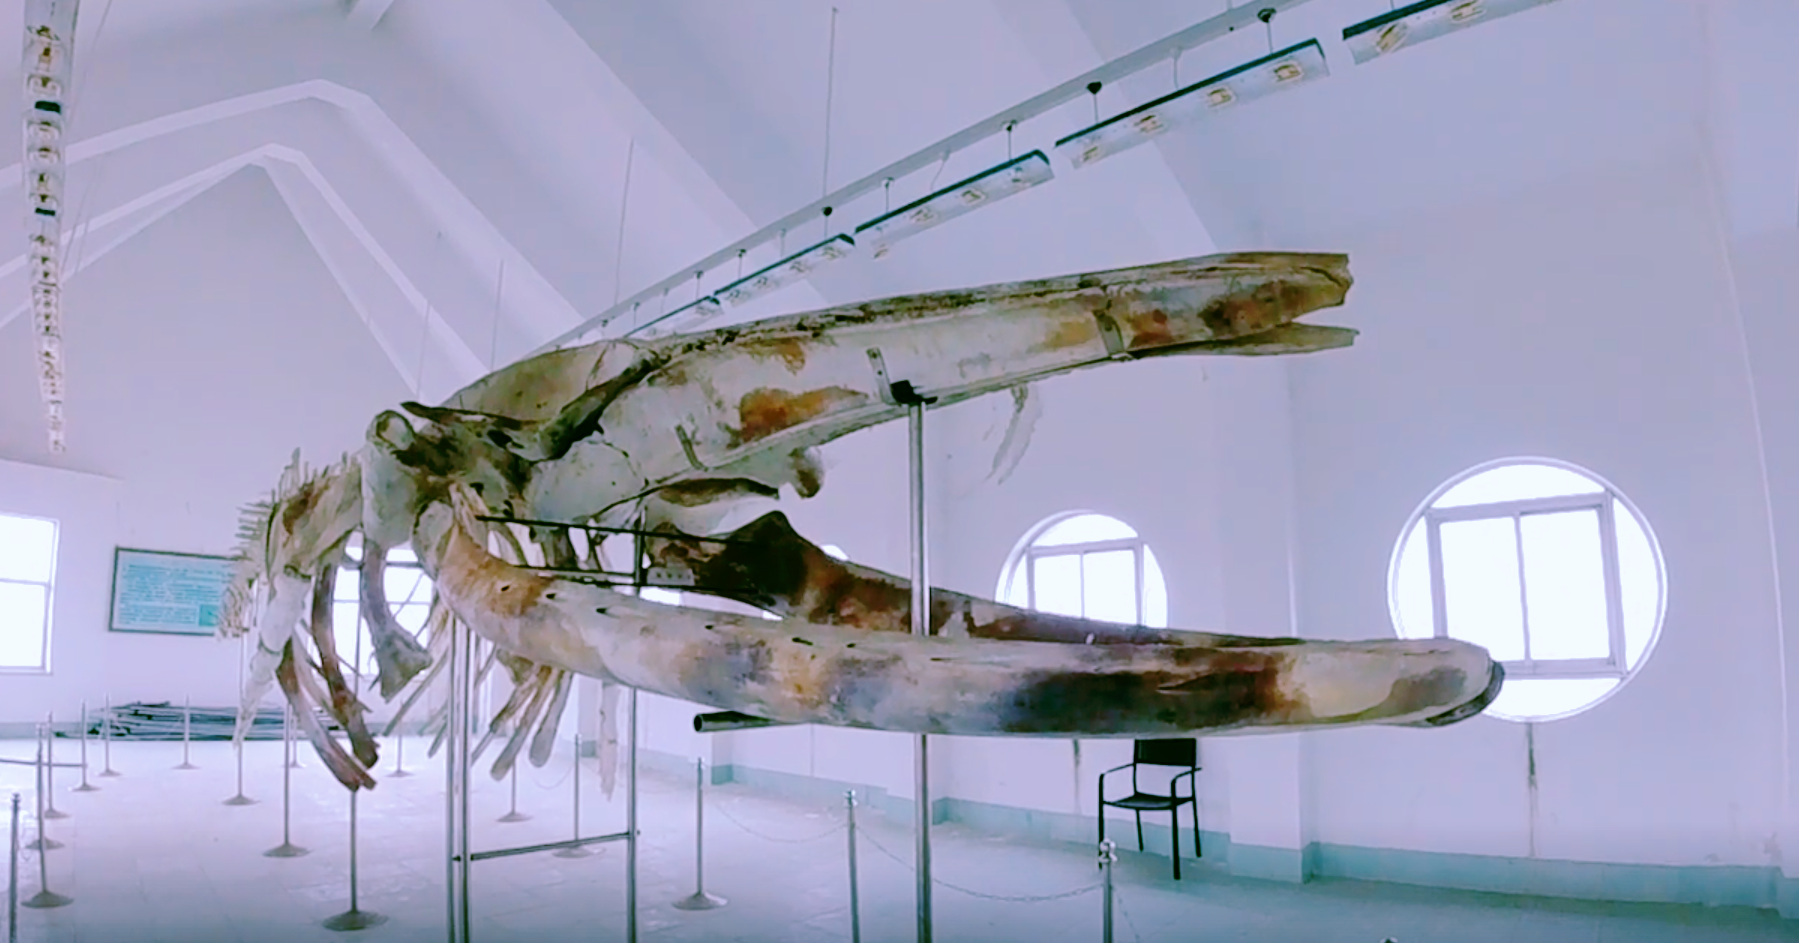 青島廢棄博物館，藏有巨鯨標本和骨骼，被一個老人日夜守護著